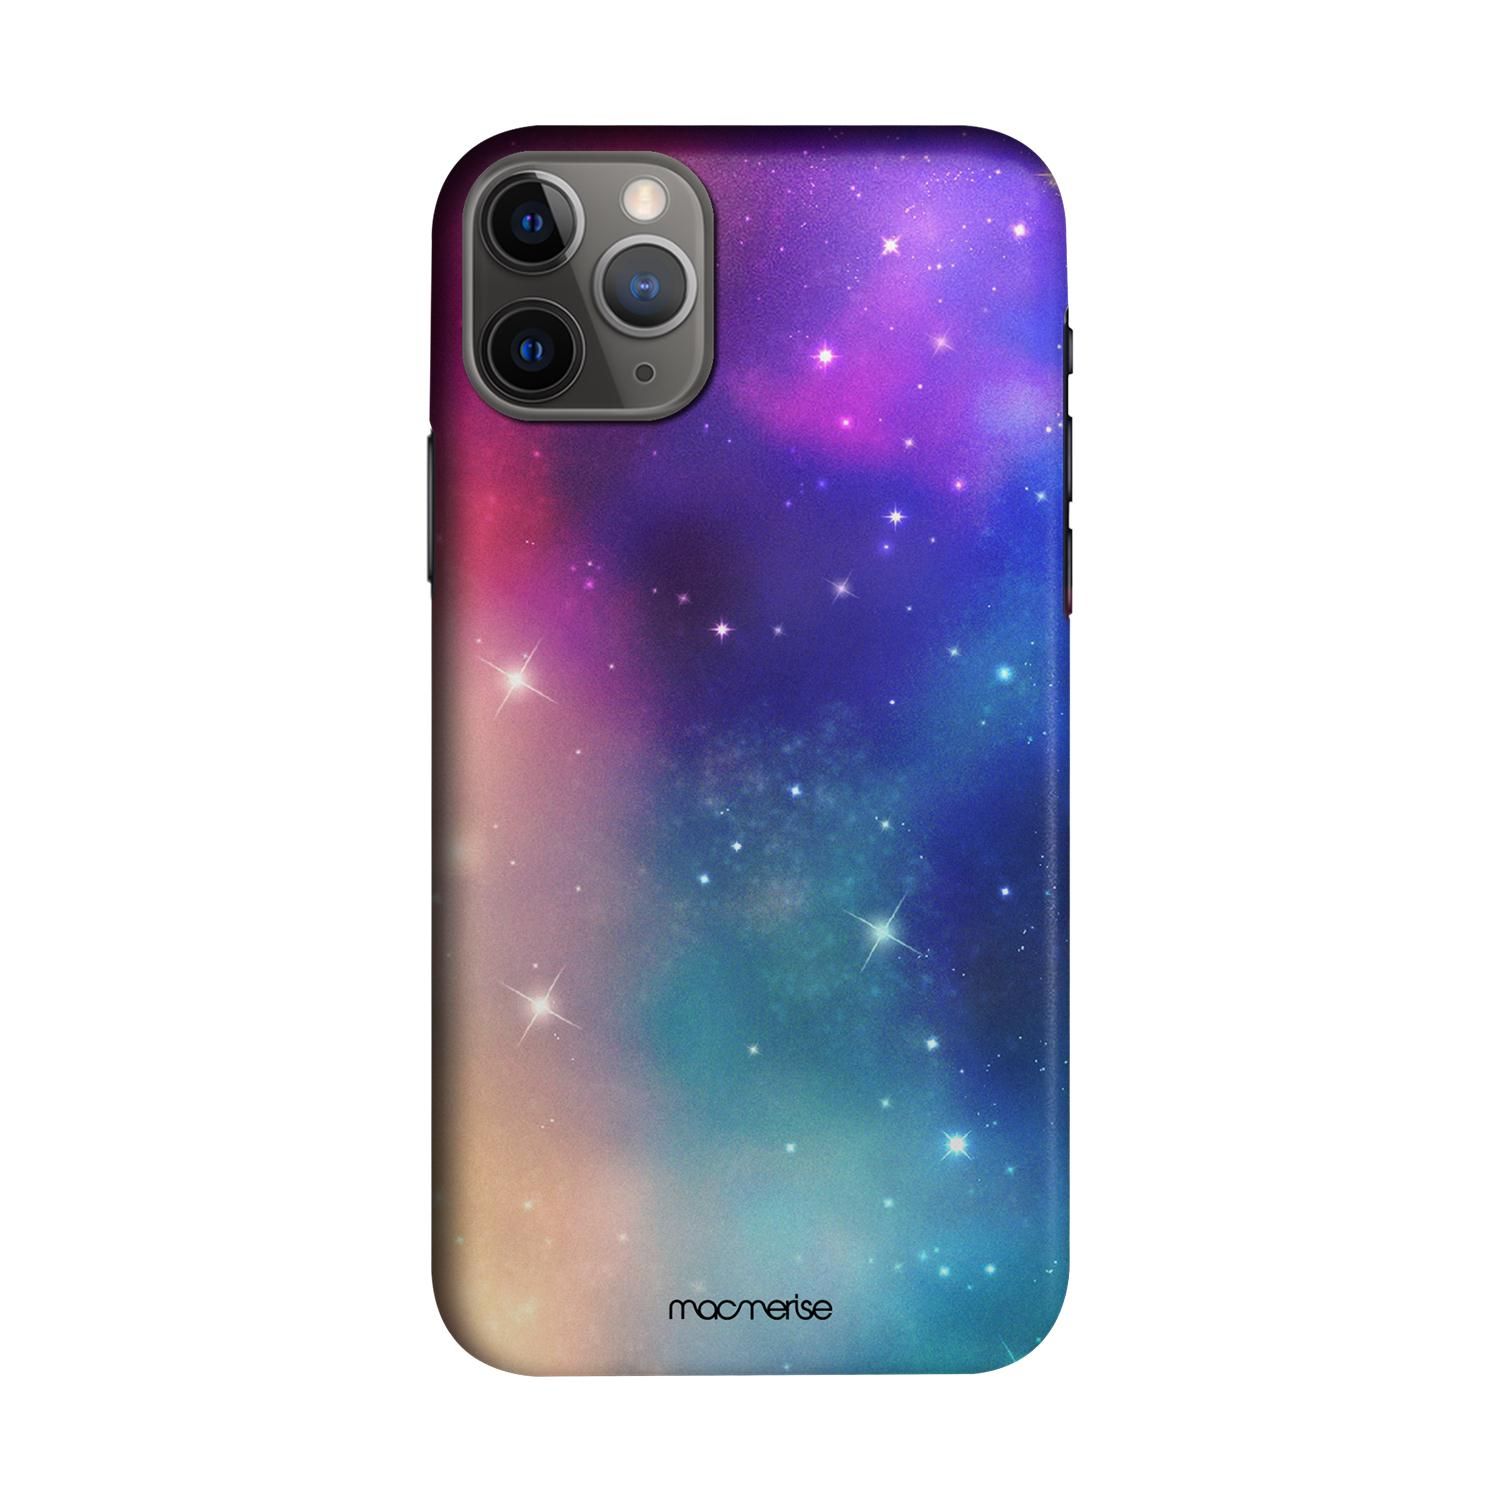 Buy Sky Full of Stars - Sleek Phone Case for iPhone 11 Pro Max Online